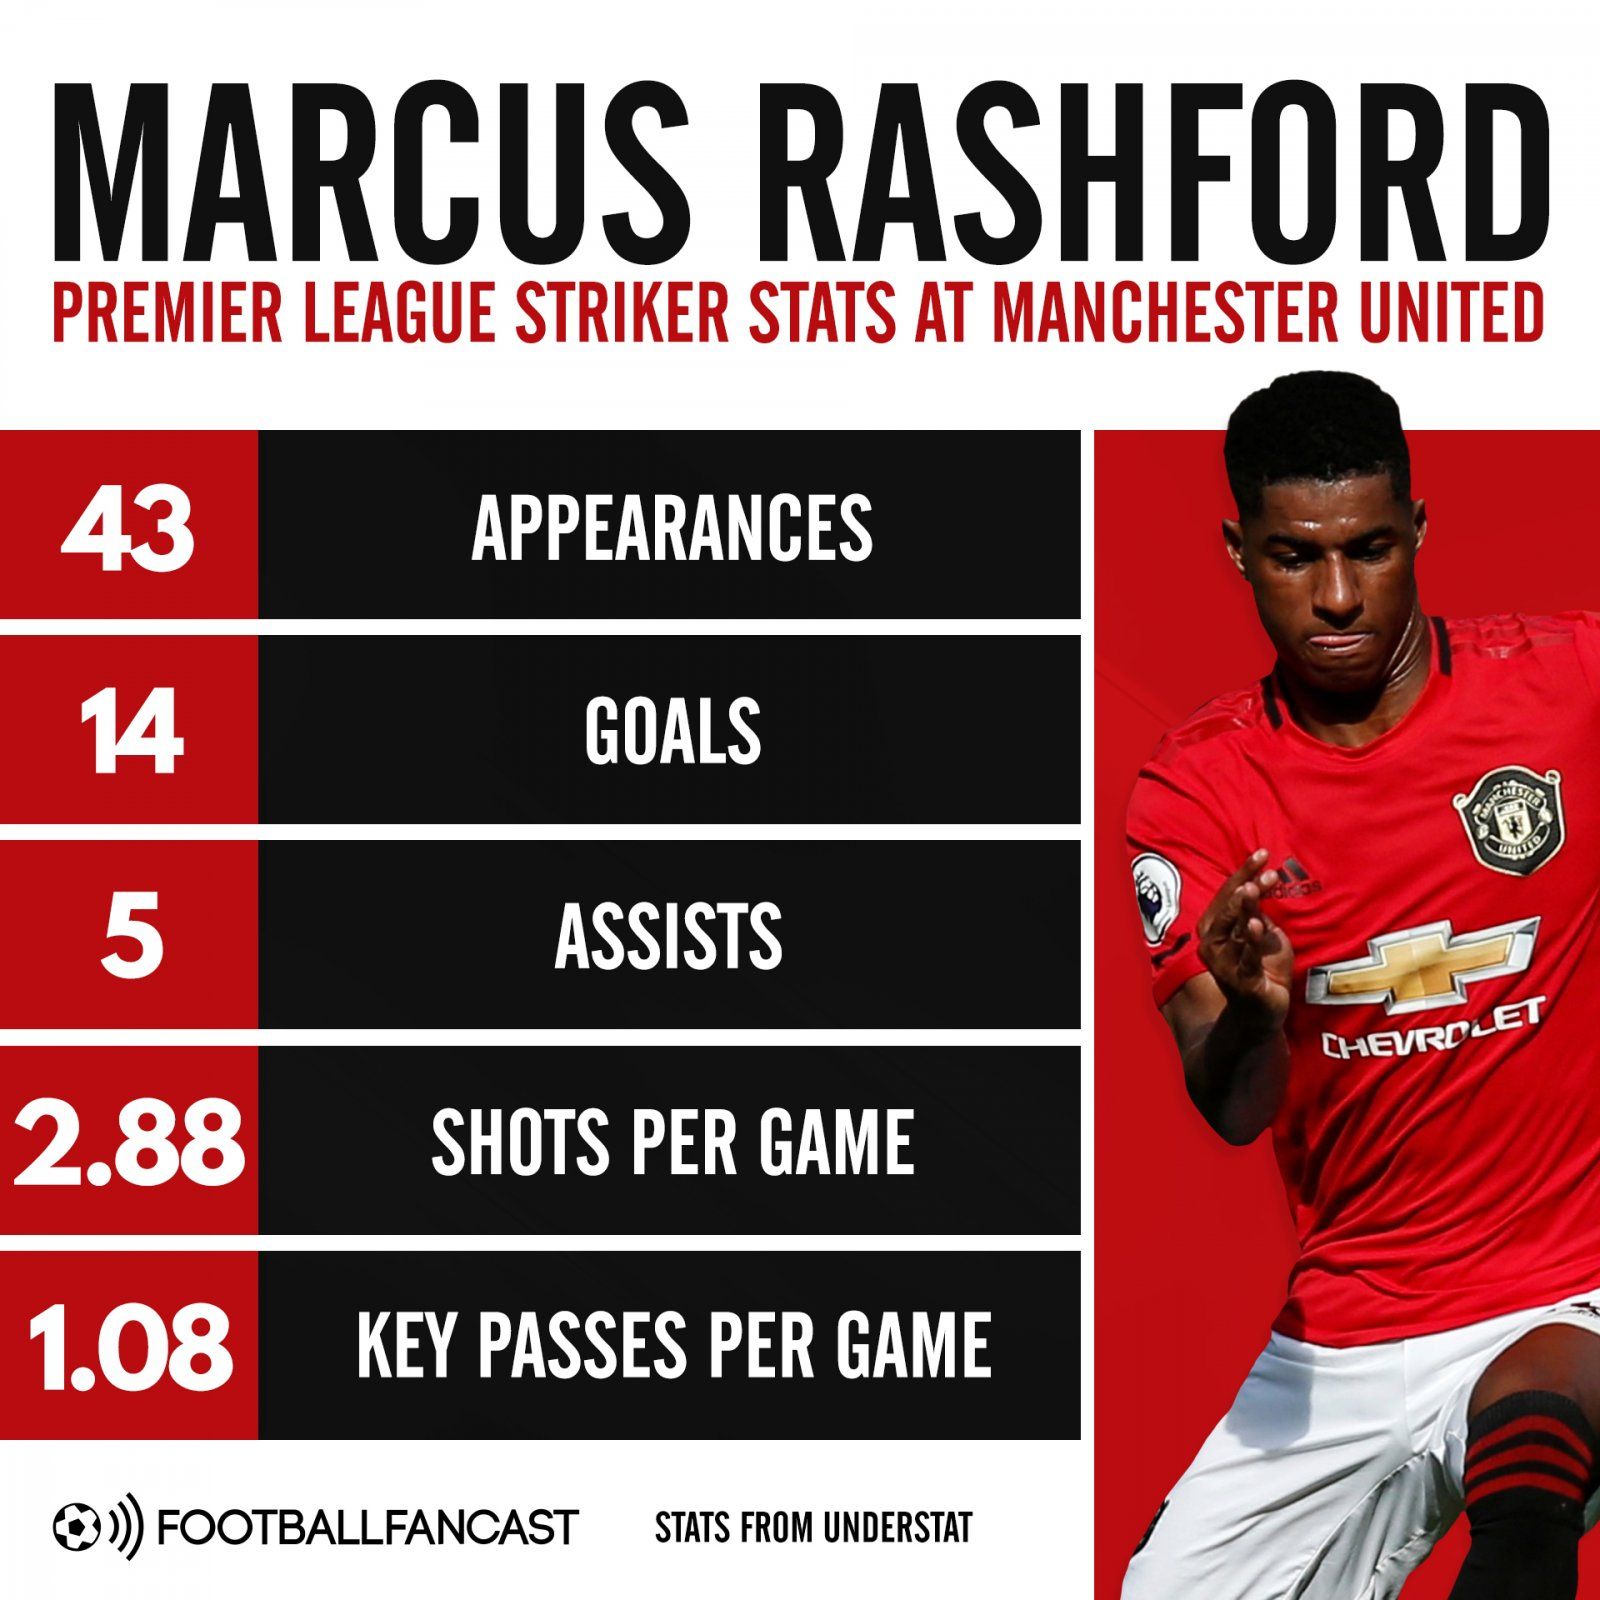 Marcus Rashford as a striker at Manchester United